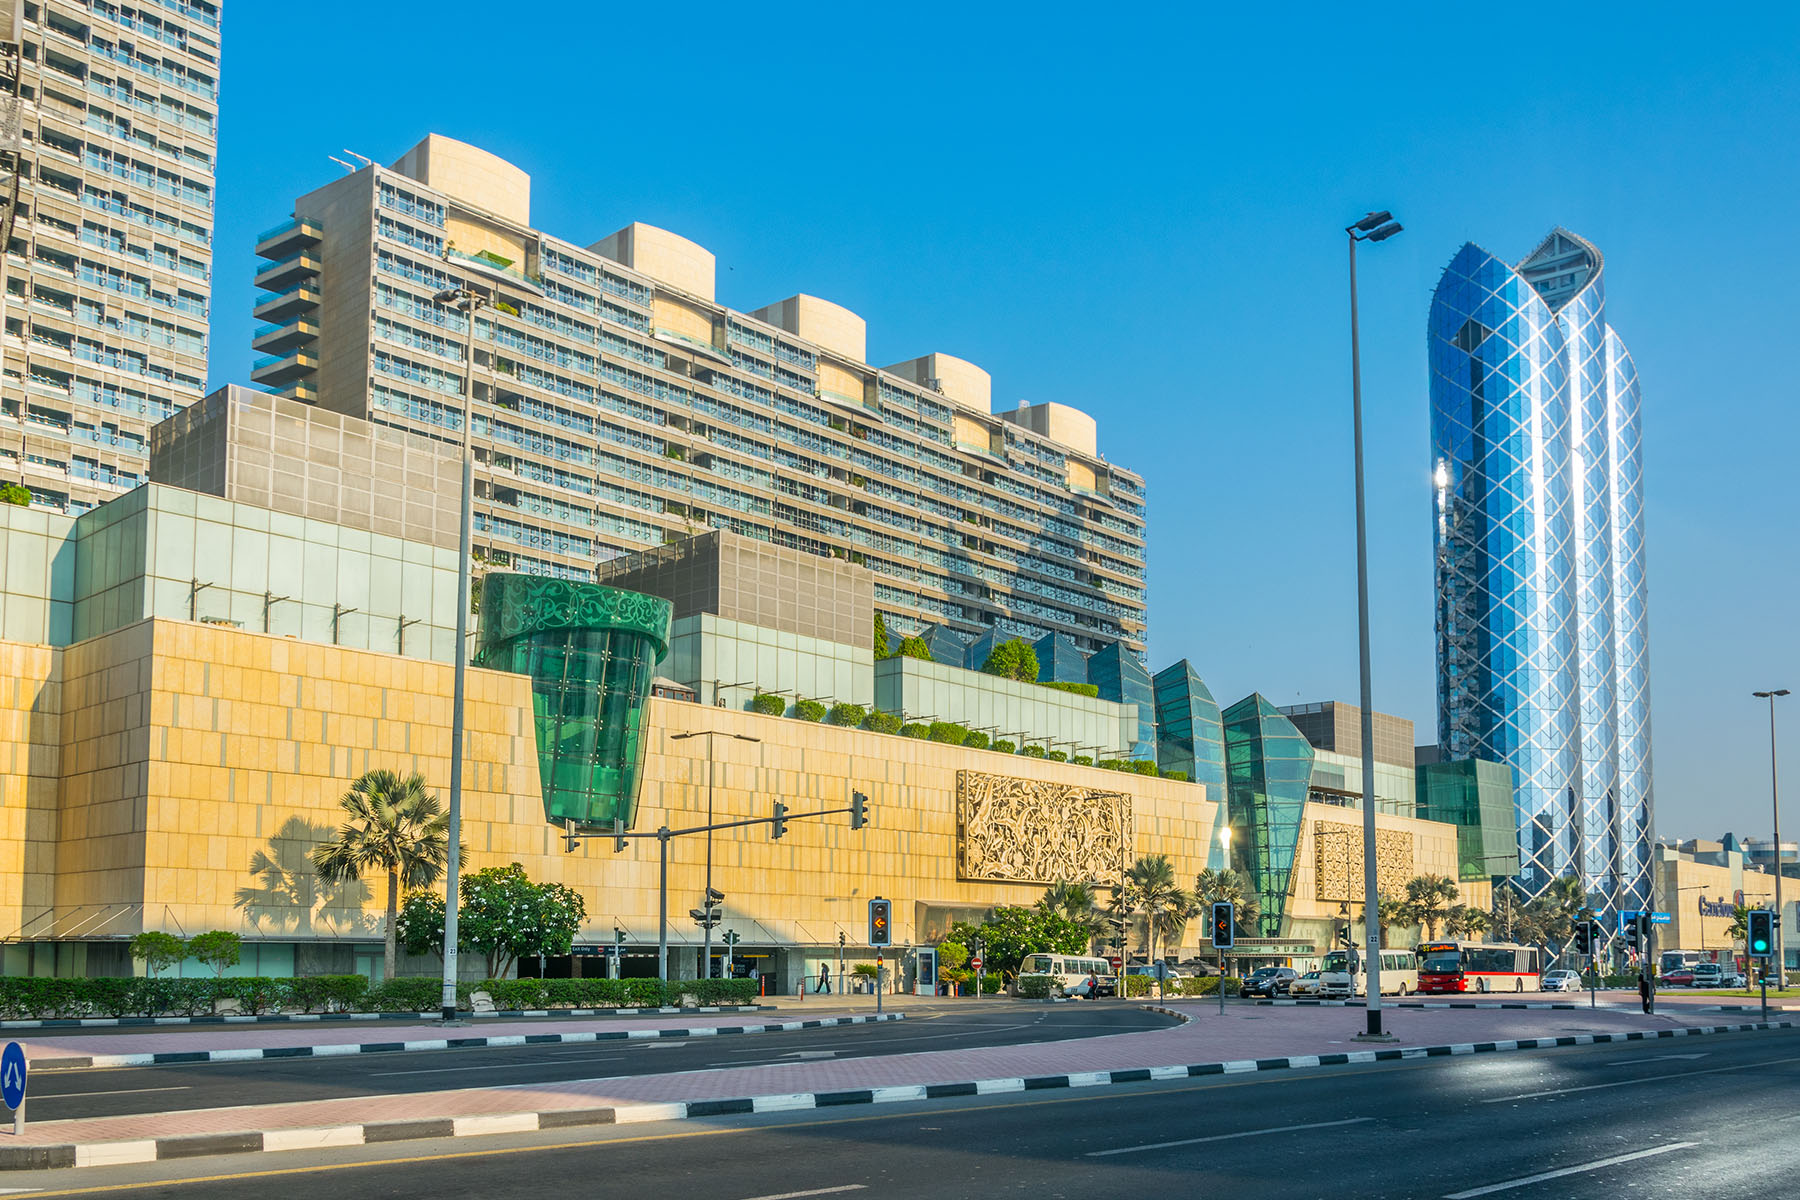 The Burjuman Mall in Dubai